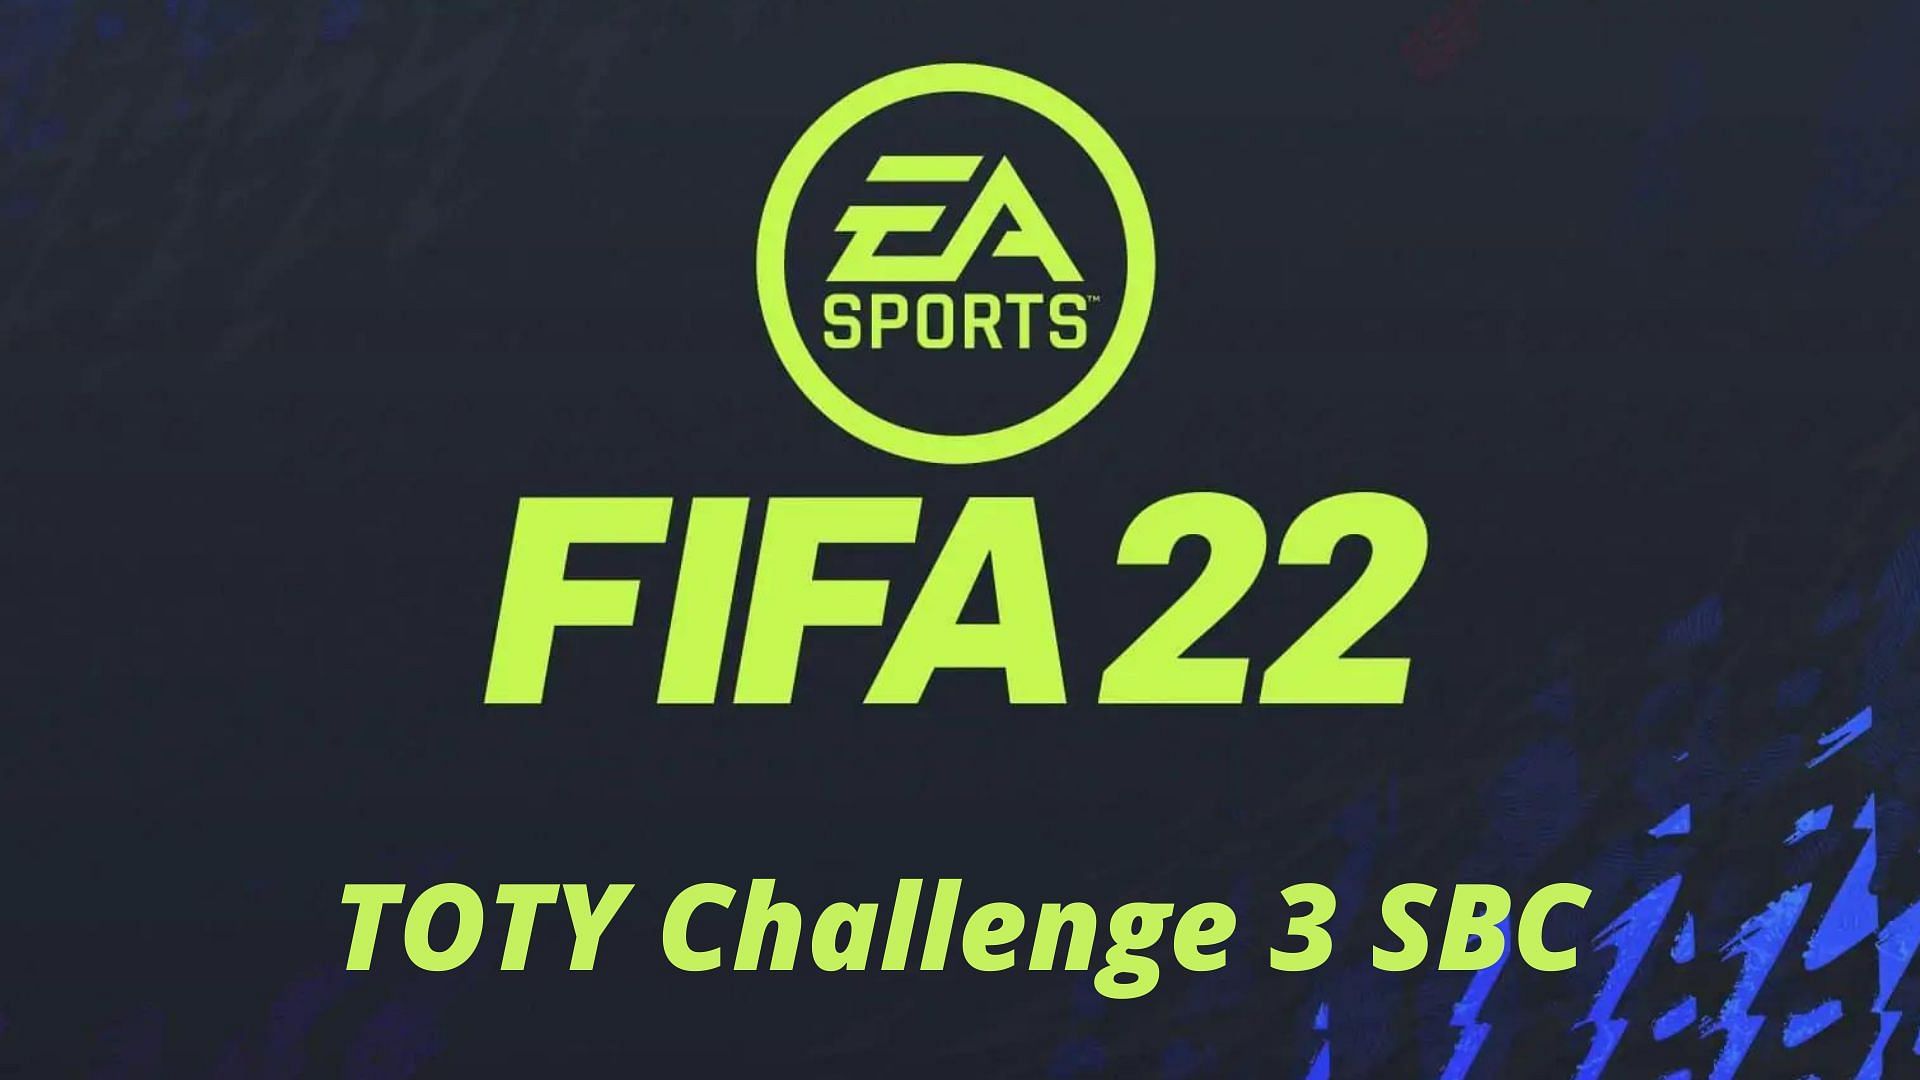 TOTY Challenge 3 SBC is live in FIFA 22 (Image via Sportskeeda)